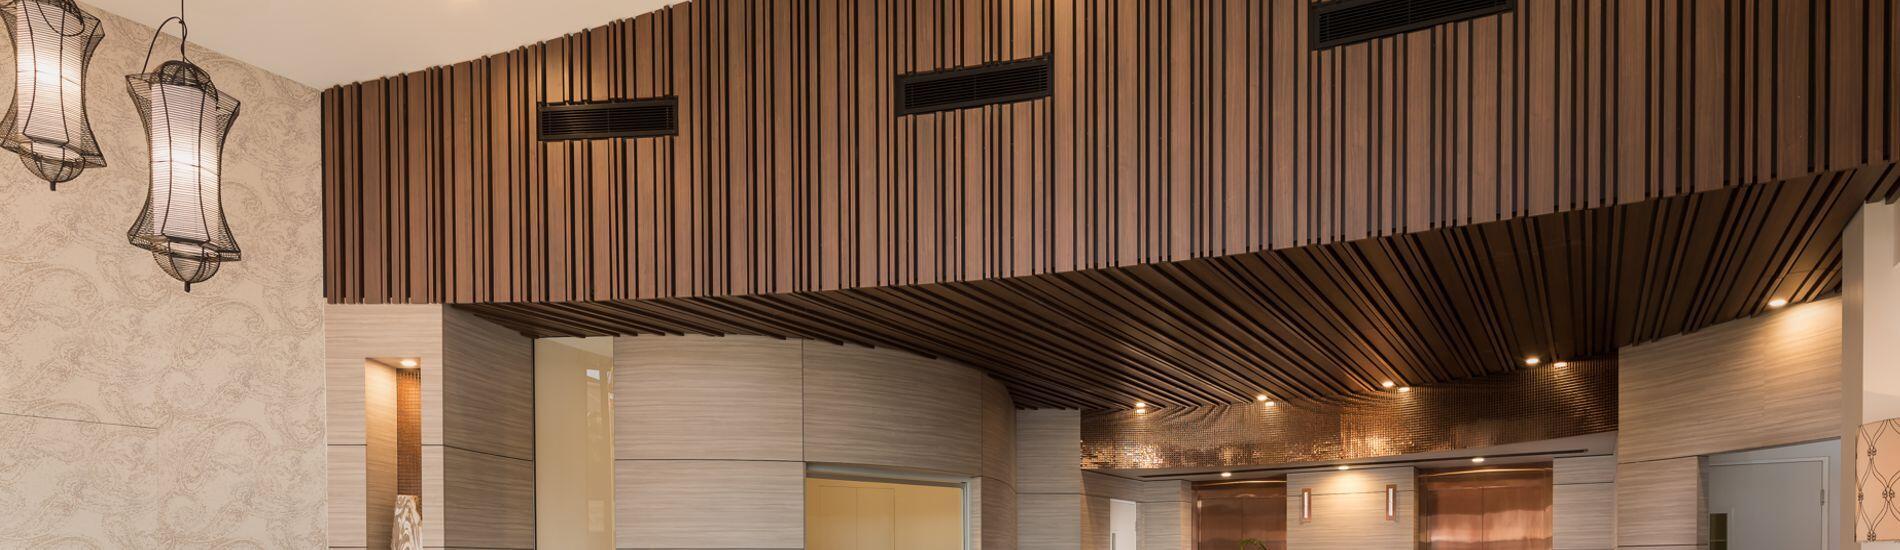 Random Profile SUPASLAT Slatted Acoustic Panels Address Noice Reverberation In Foyer